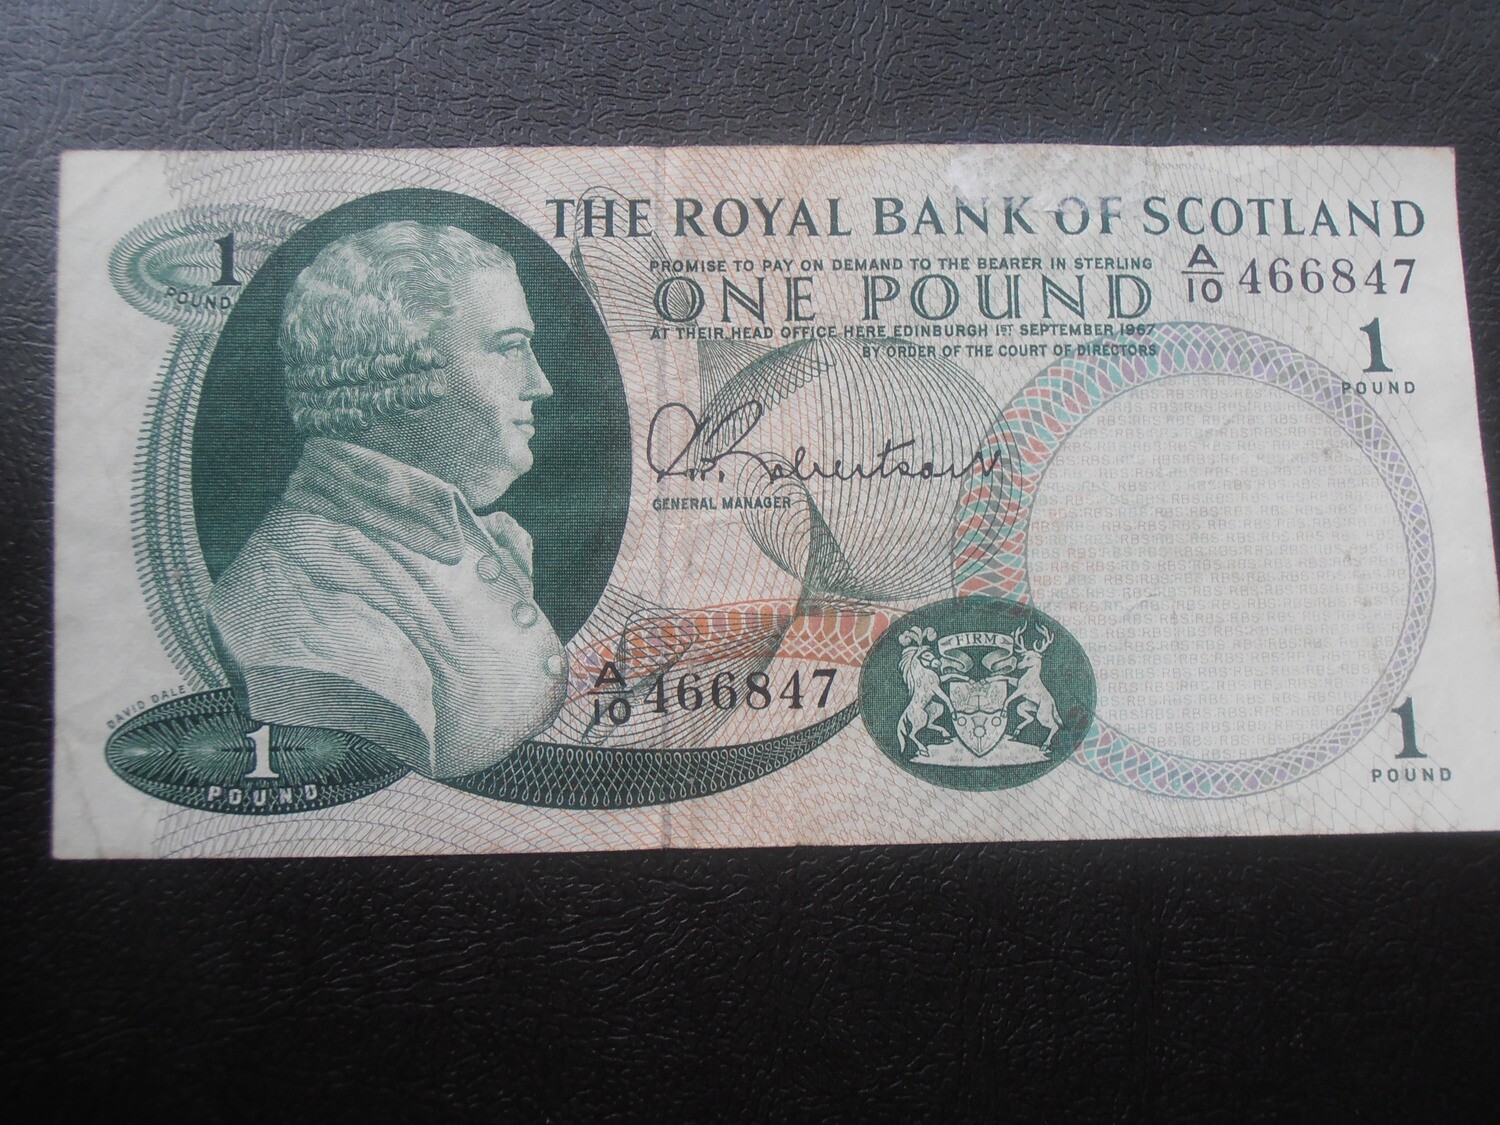 Royal Bank of Scotland £1 - 1967 David Dale